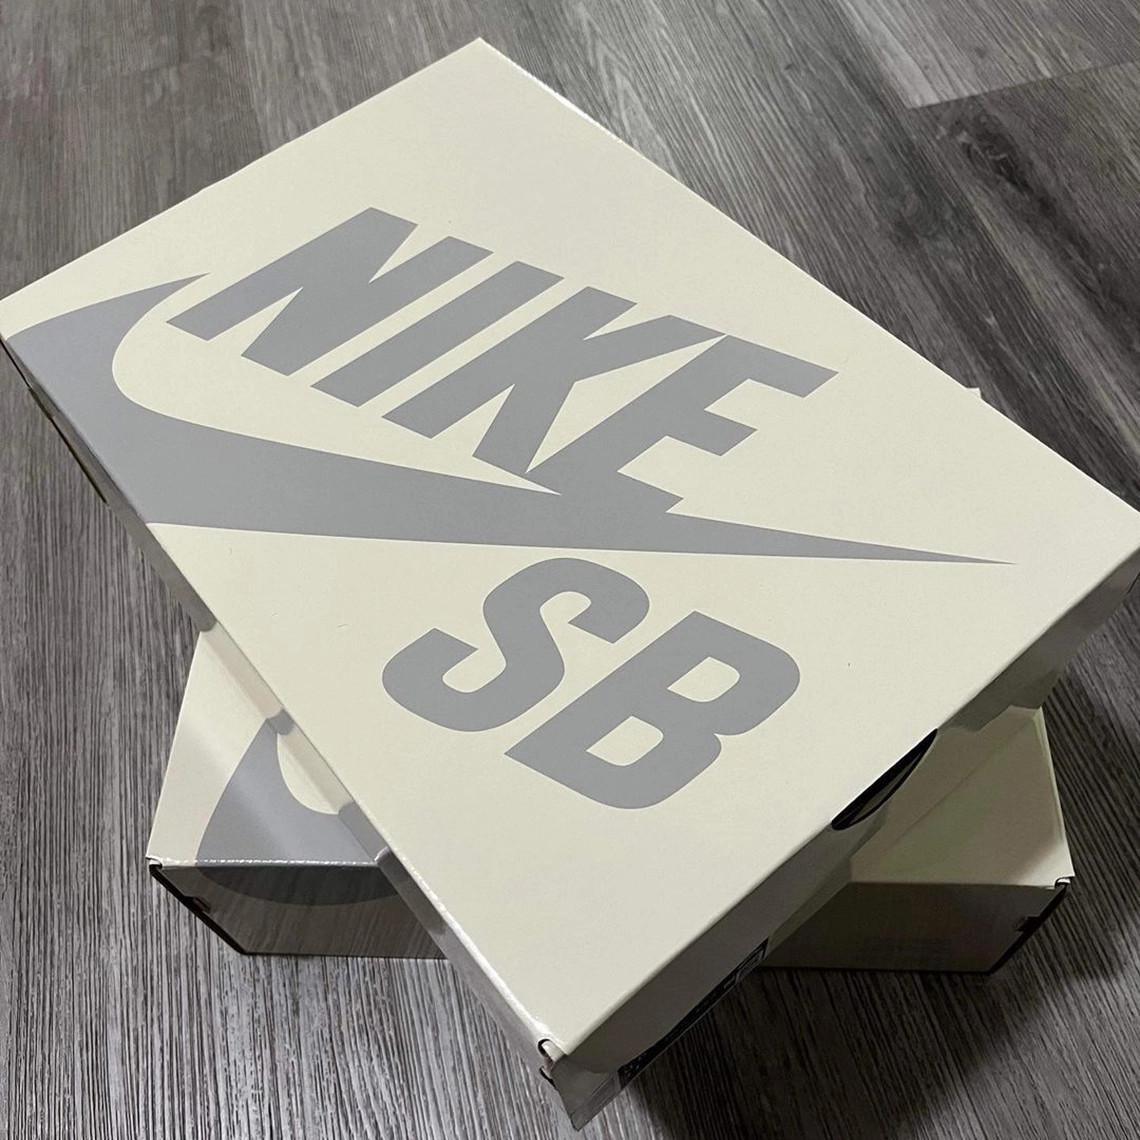 Nike SB inaugure une nouvelle box era